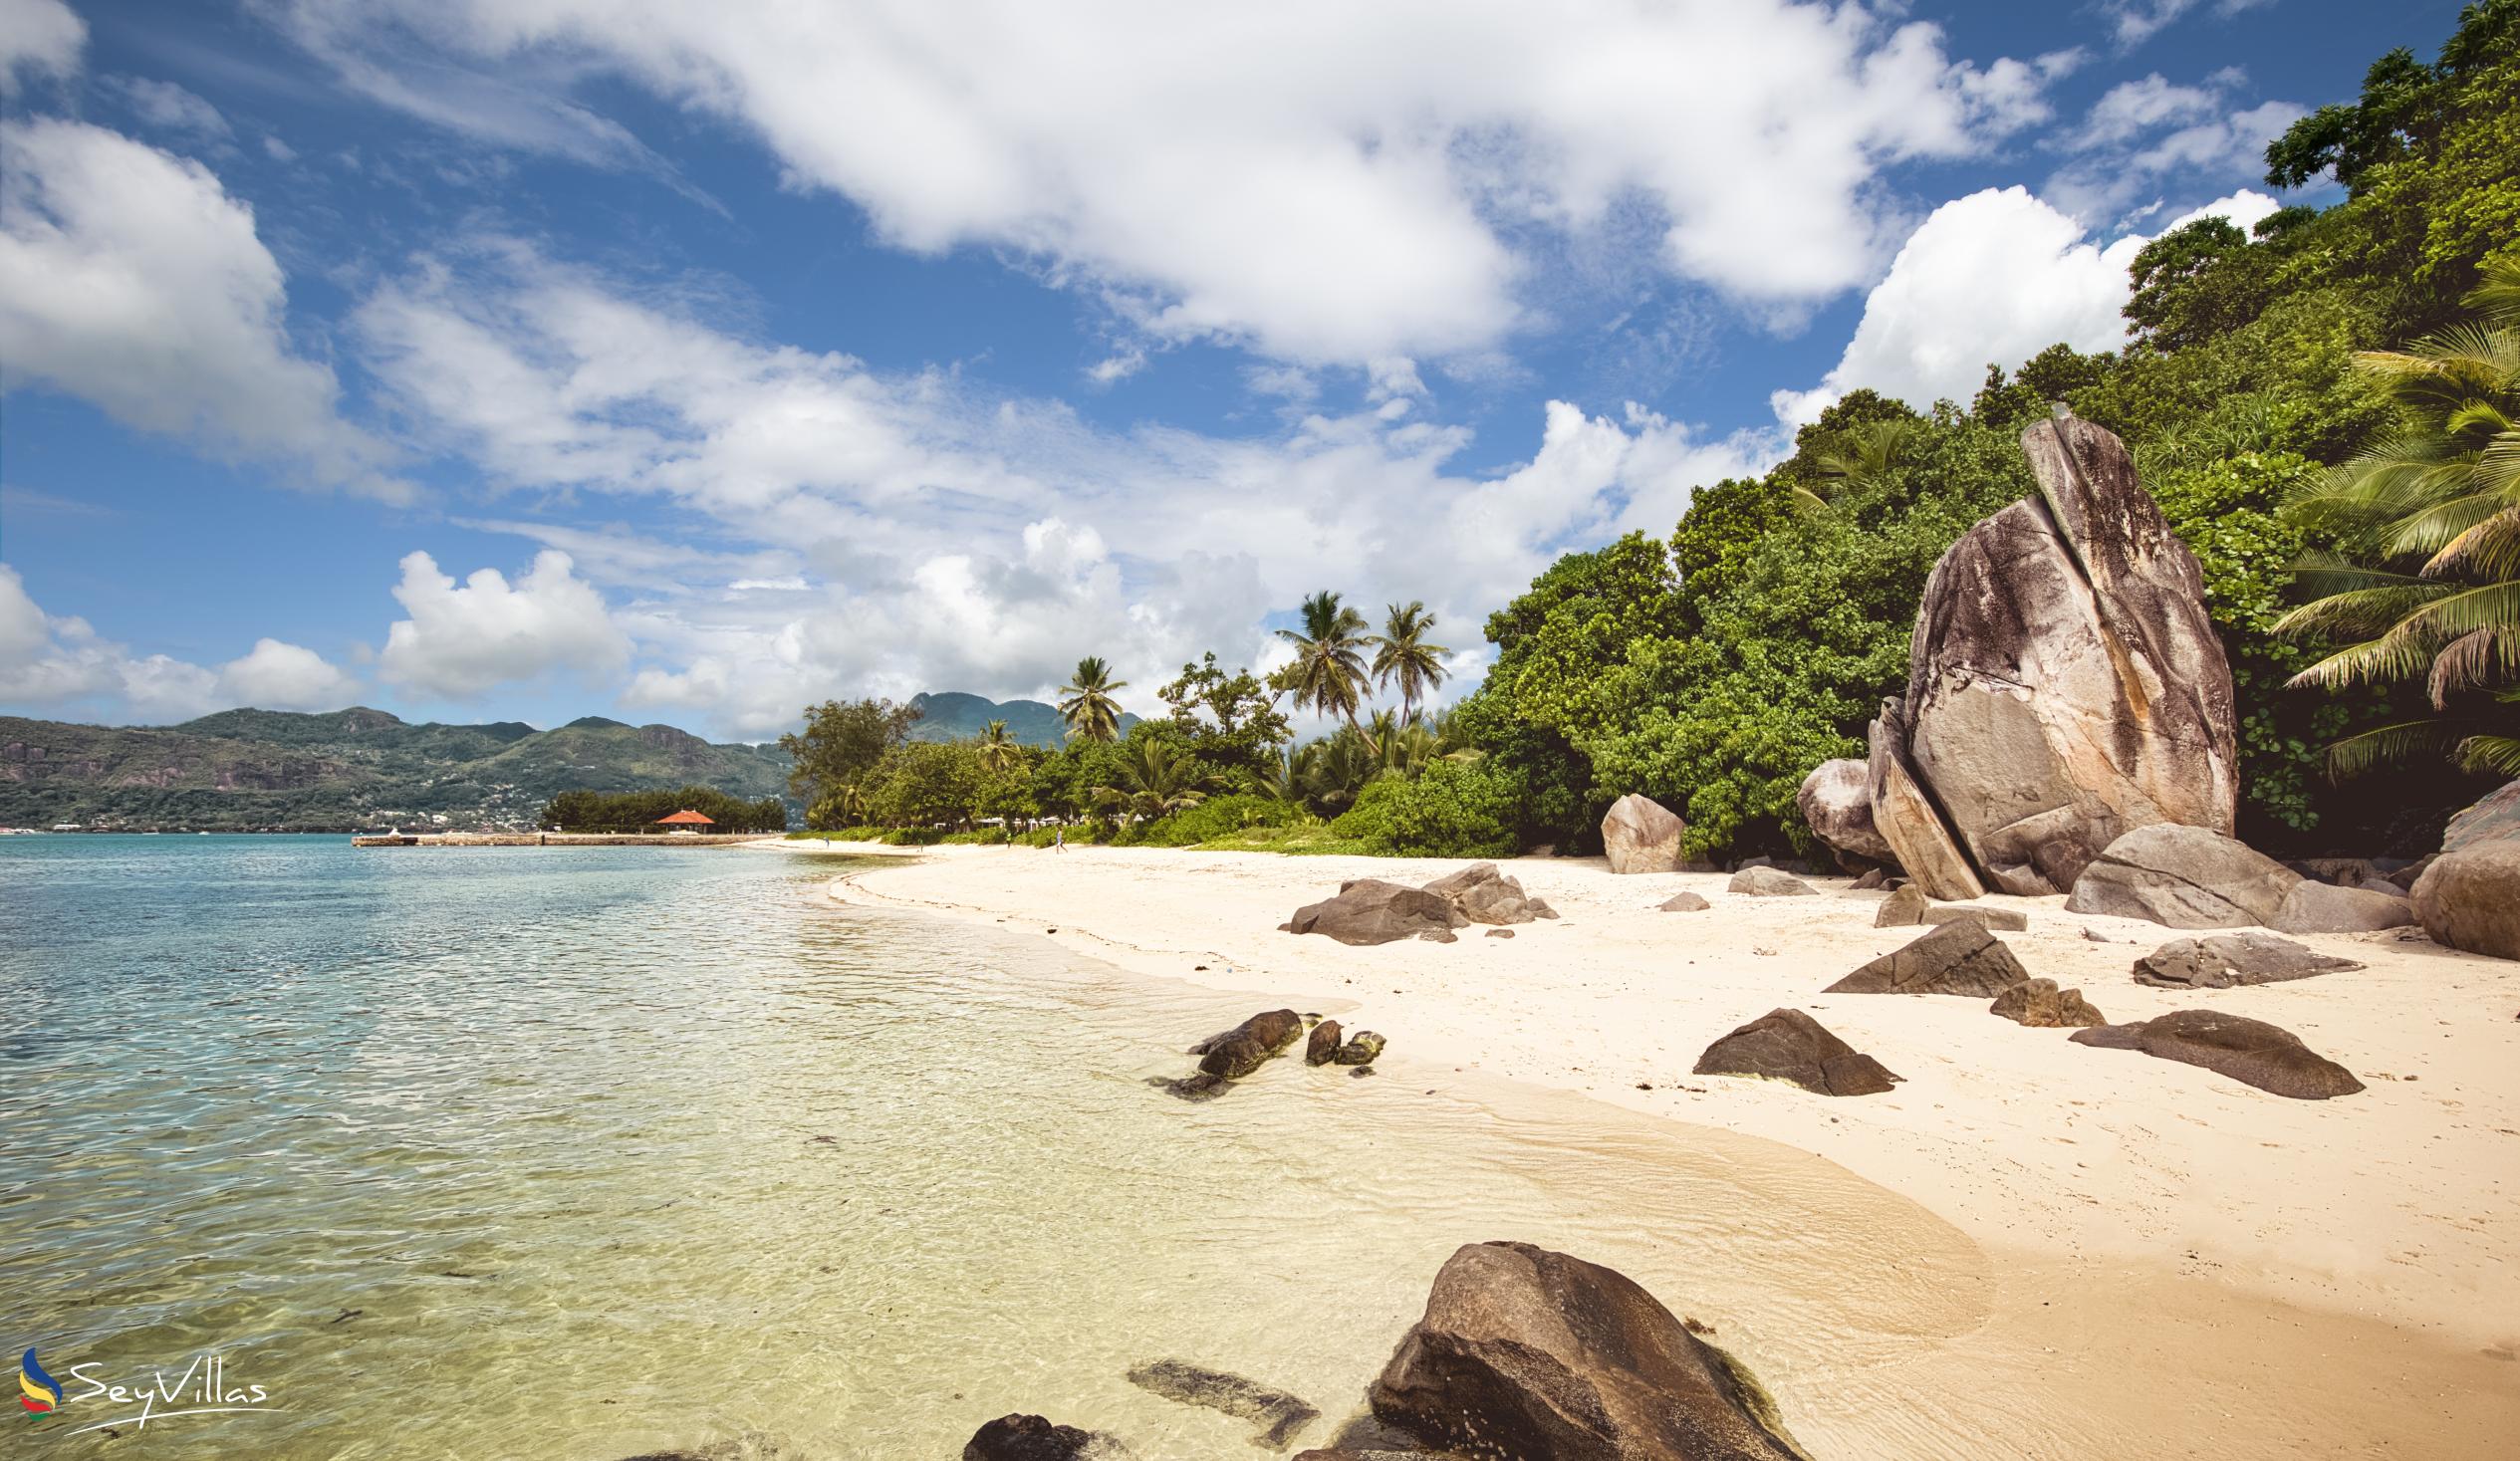 Foto 42: Club Med Seychelles - Location - Saint Anne (Seychelles)